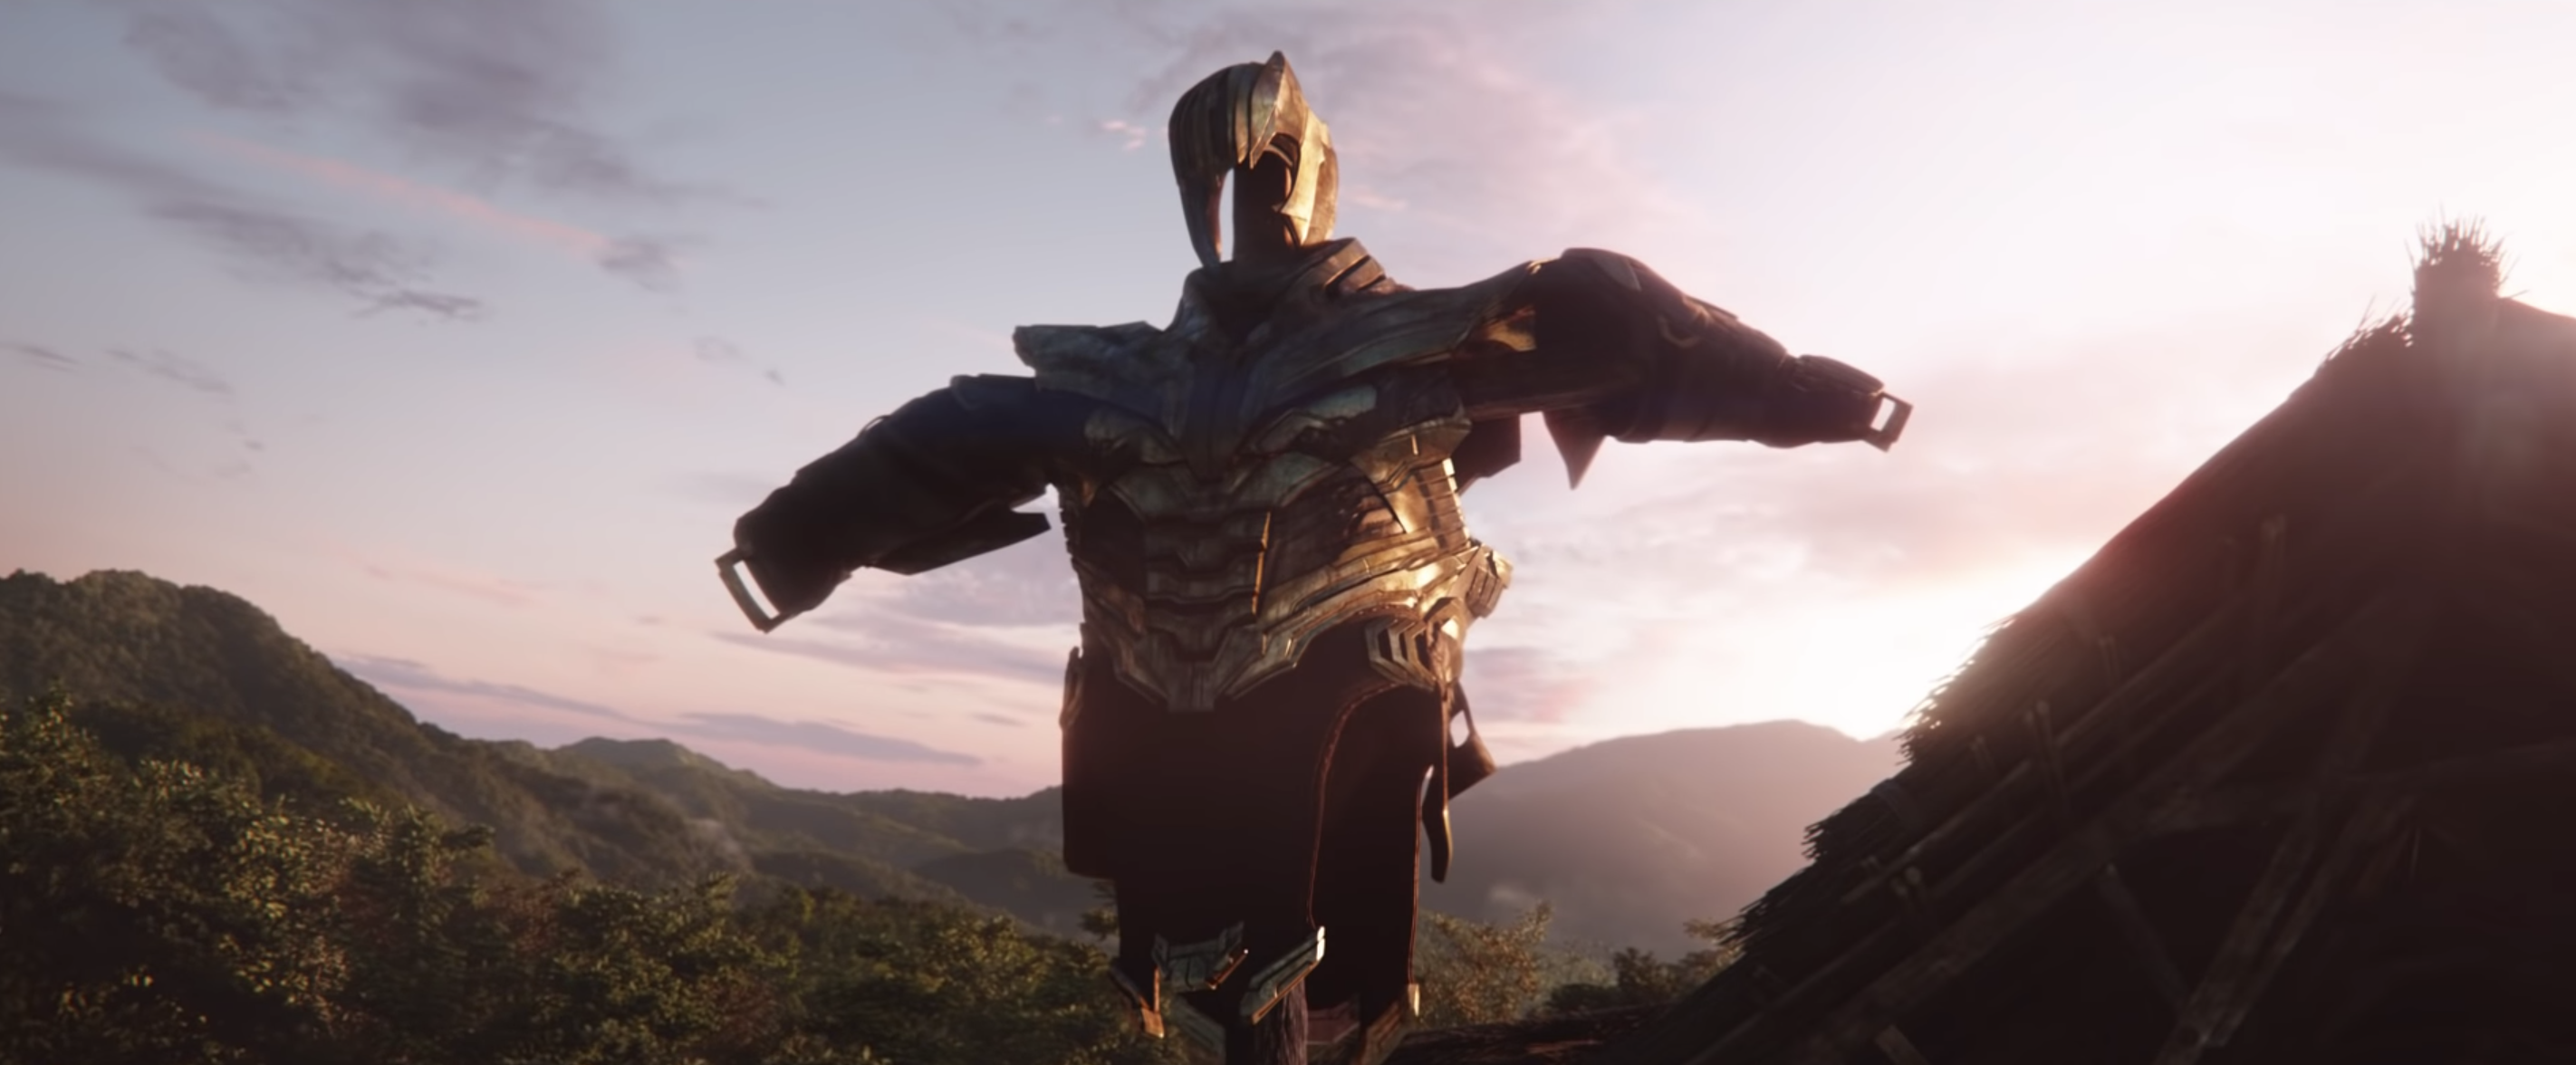 'Avengers: Endgame' Trailer Smashes 24-Hour Video Views Record